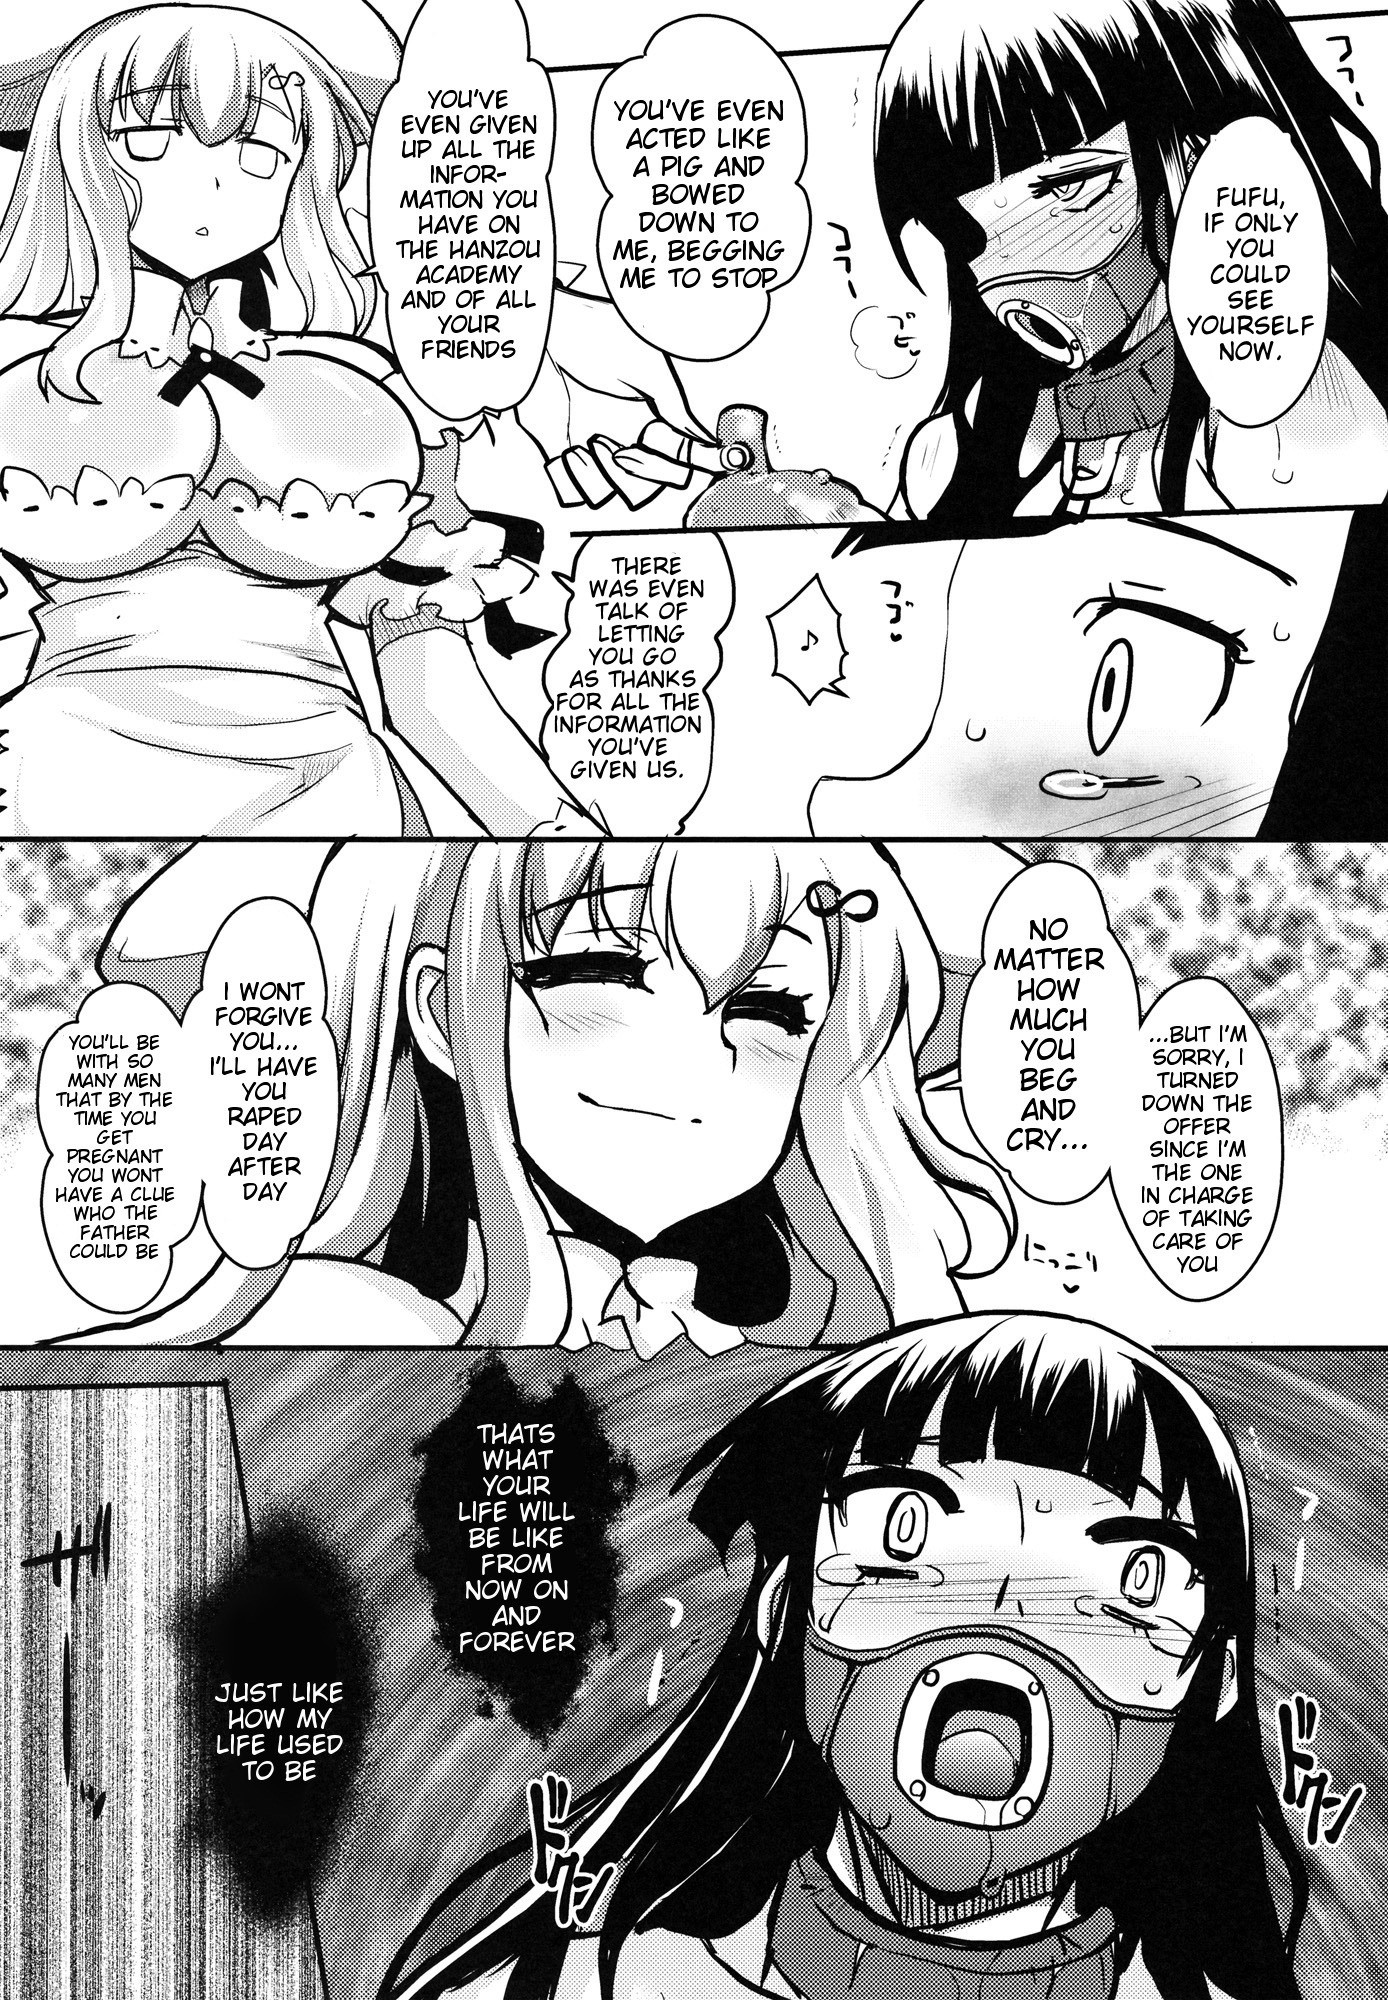 Falling Flower, Snake of Lust hentai manga picture 16